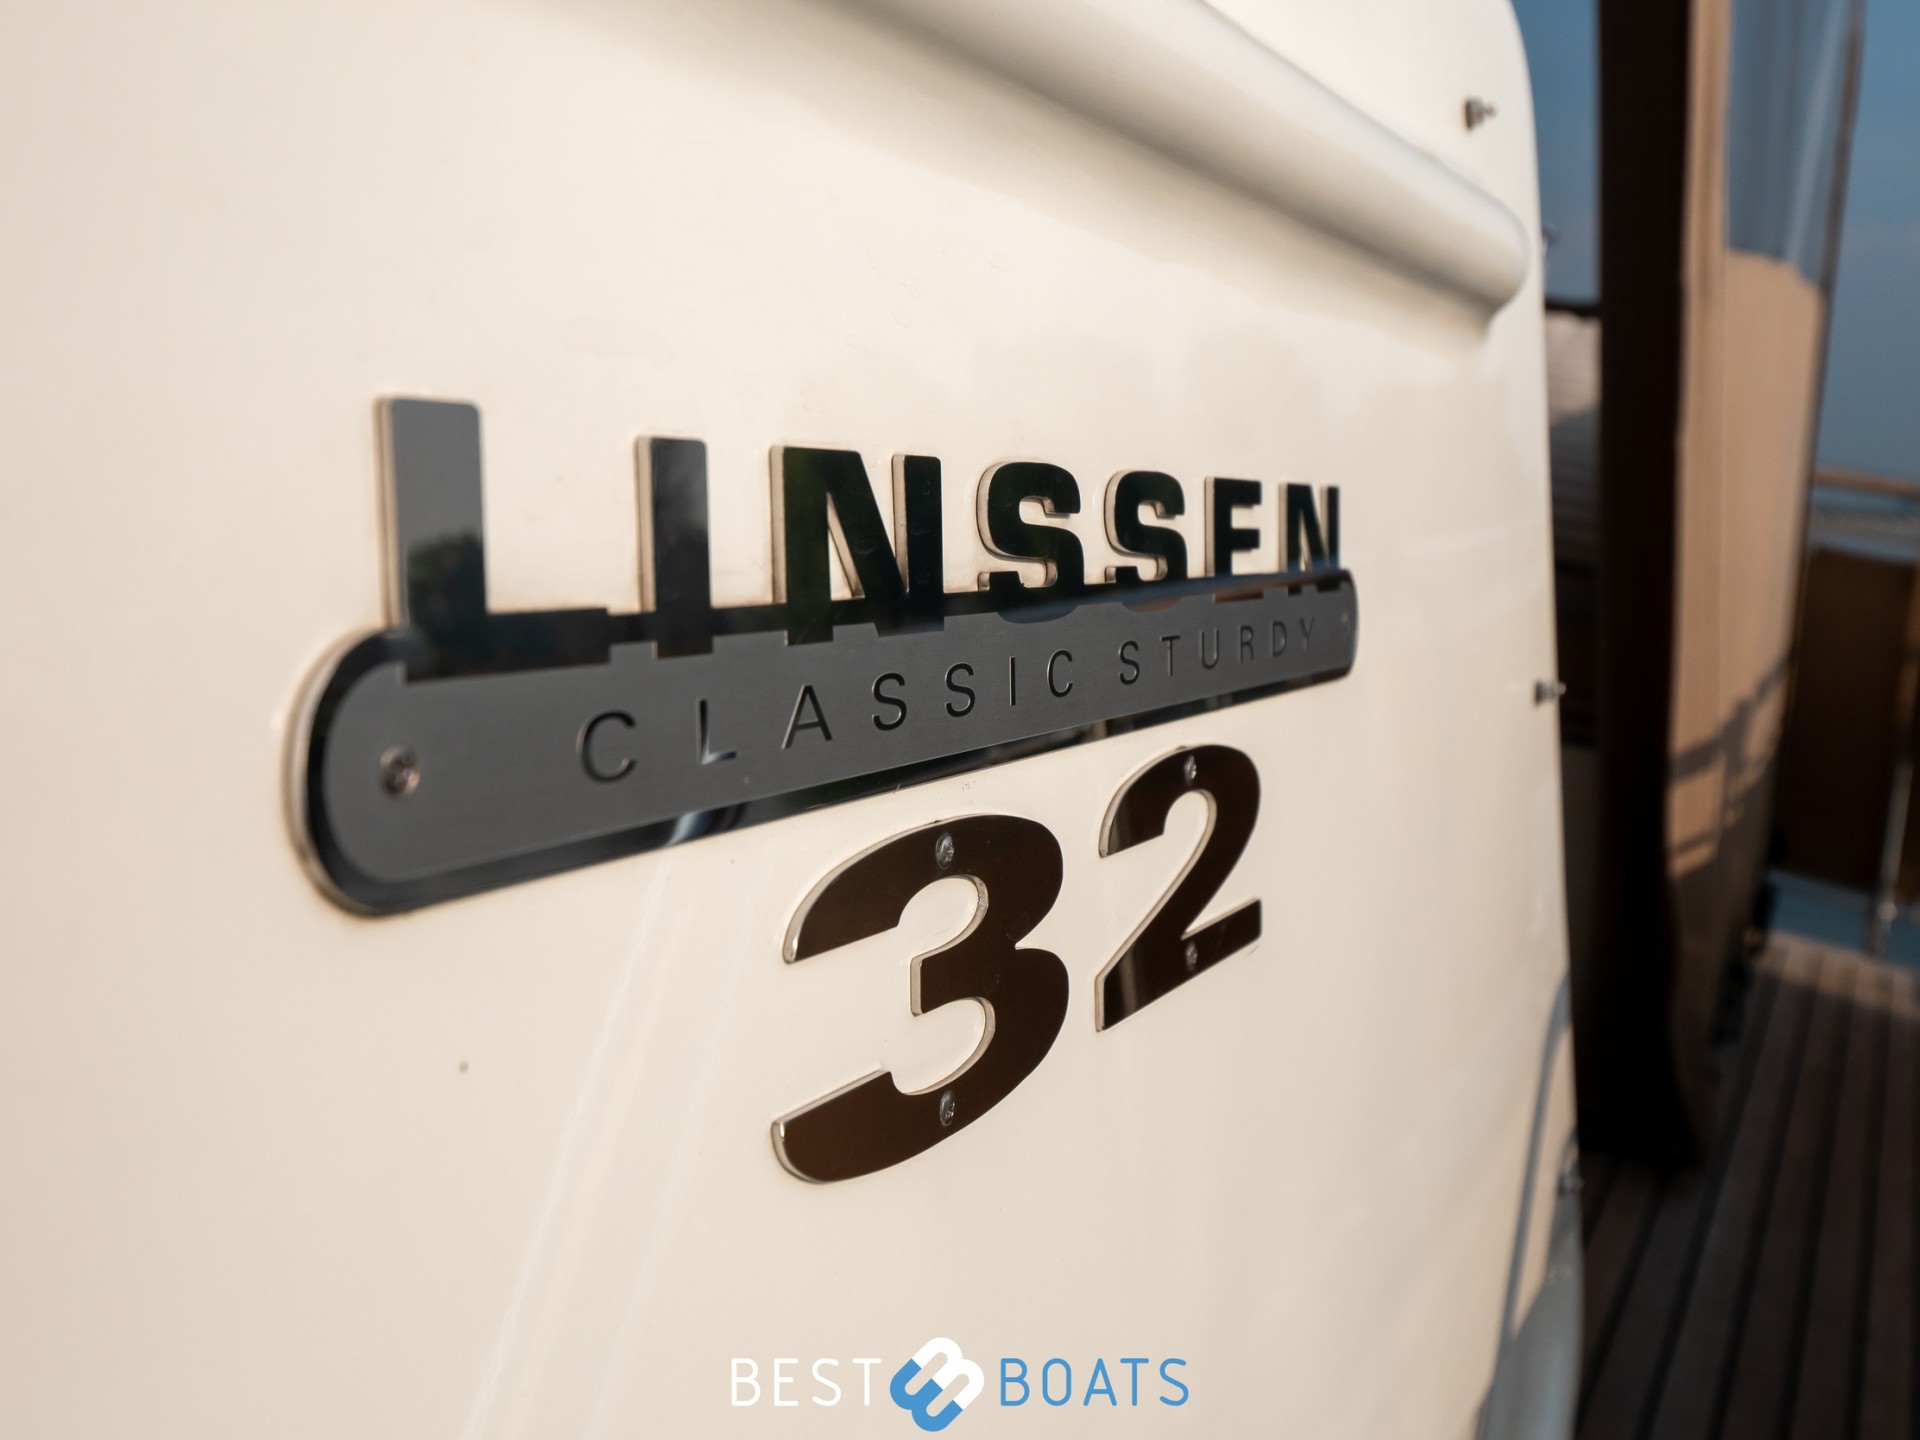 Linssen Classic Sturdy 32.0 AC